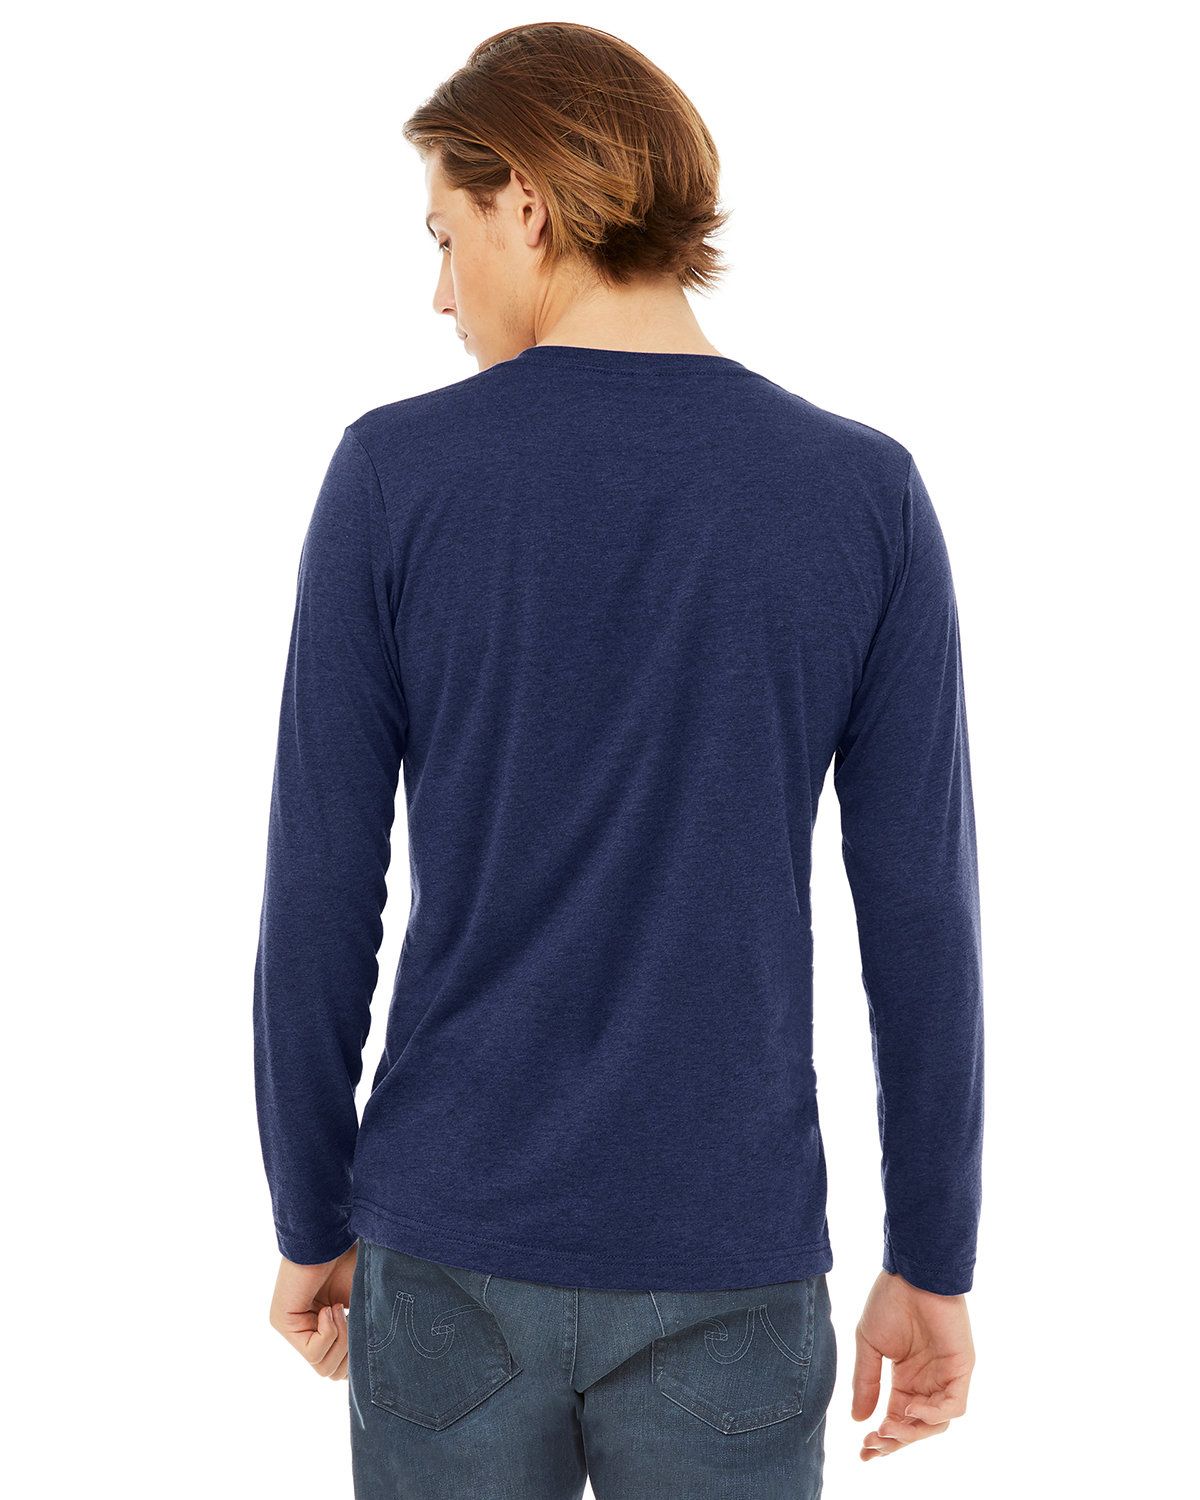 'Bella Canvas 3425 Unisex Jersey Long Sleeve V Neck T Shirt'